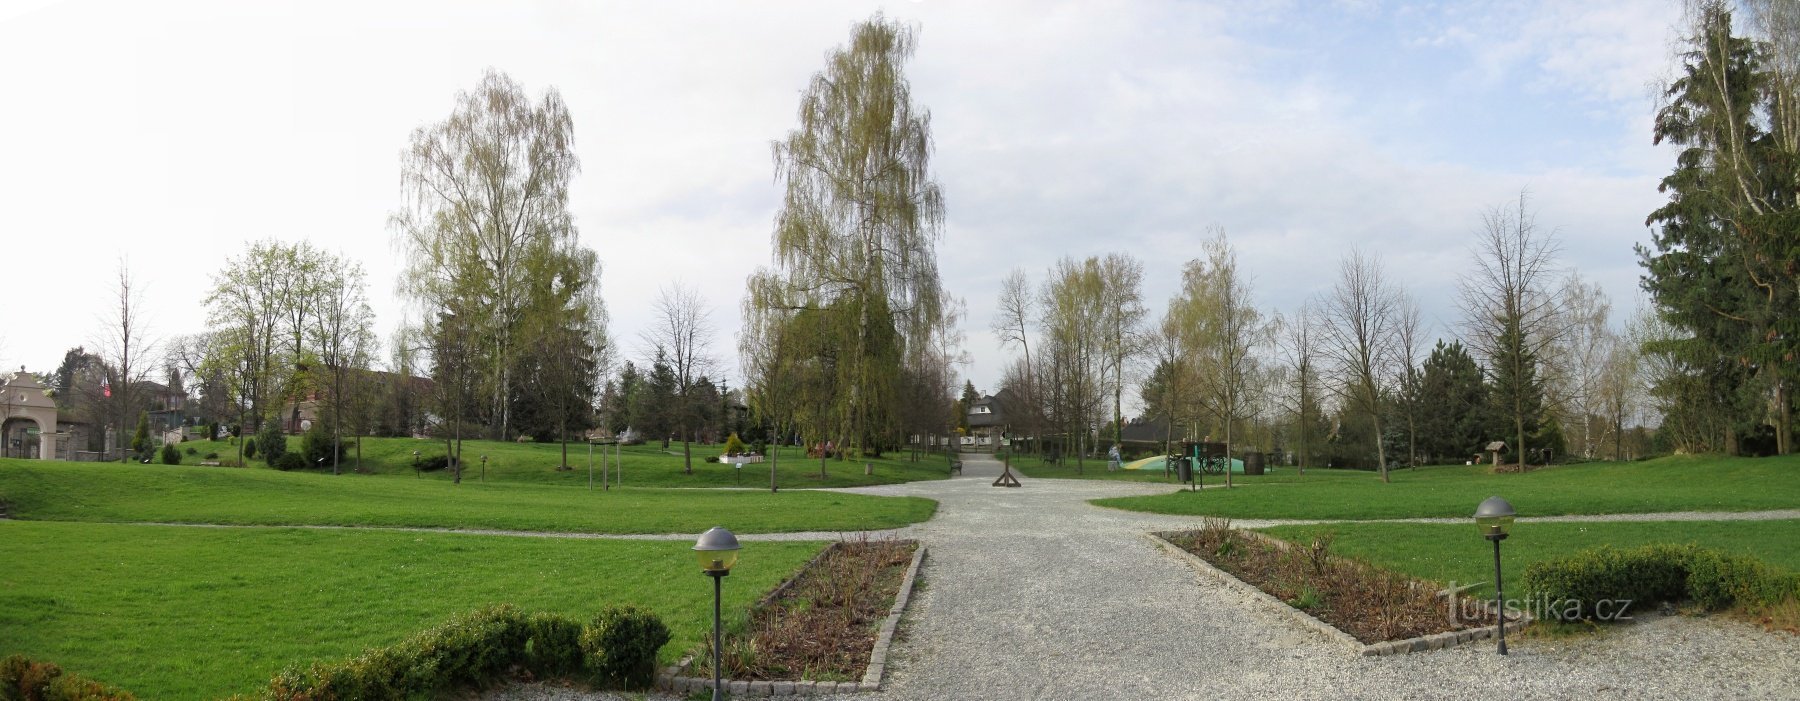 Kunice - Schloss Berchtold, Park mit Miniaturschlössern und Lehrpfad